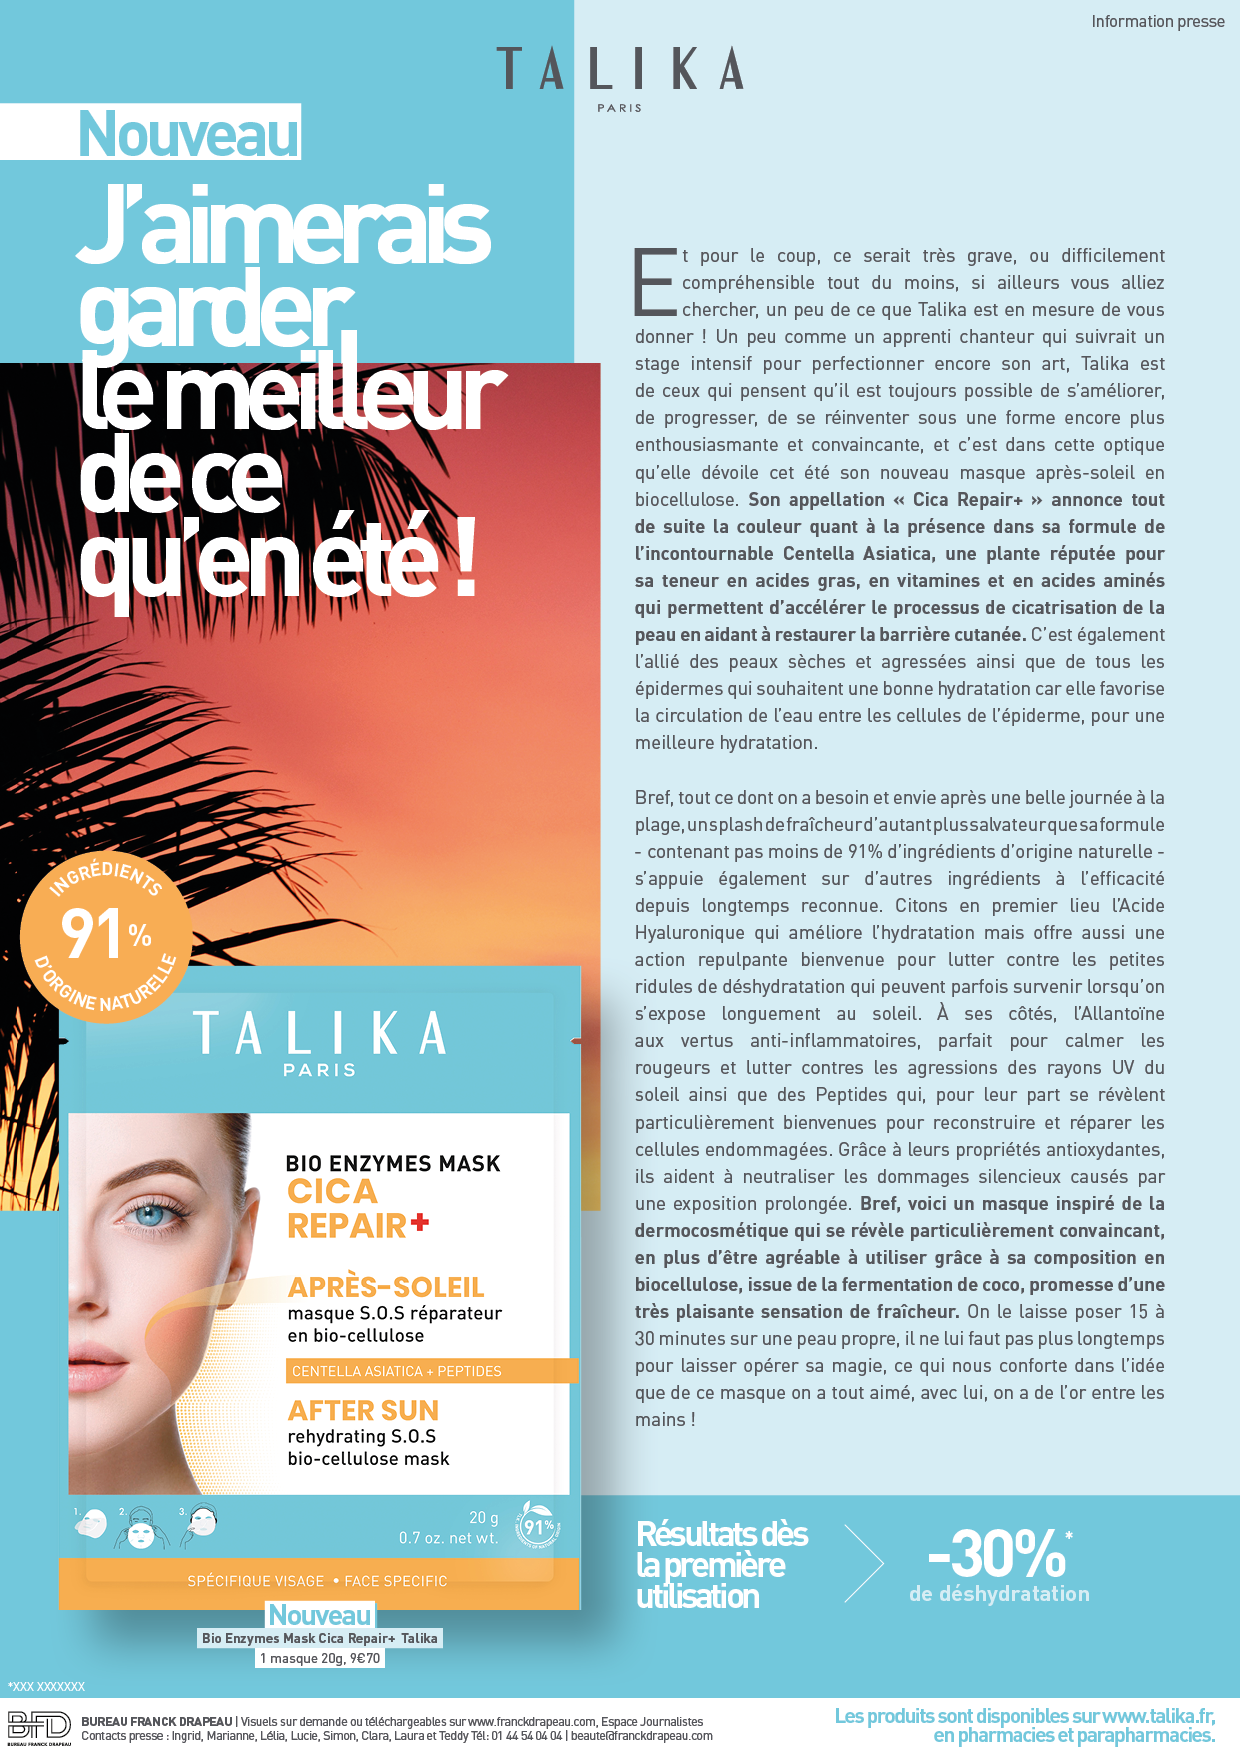 Talika | Cica Repair+ Après-Soleil